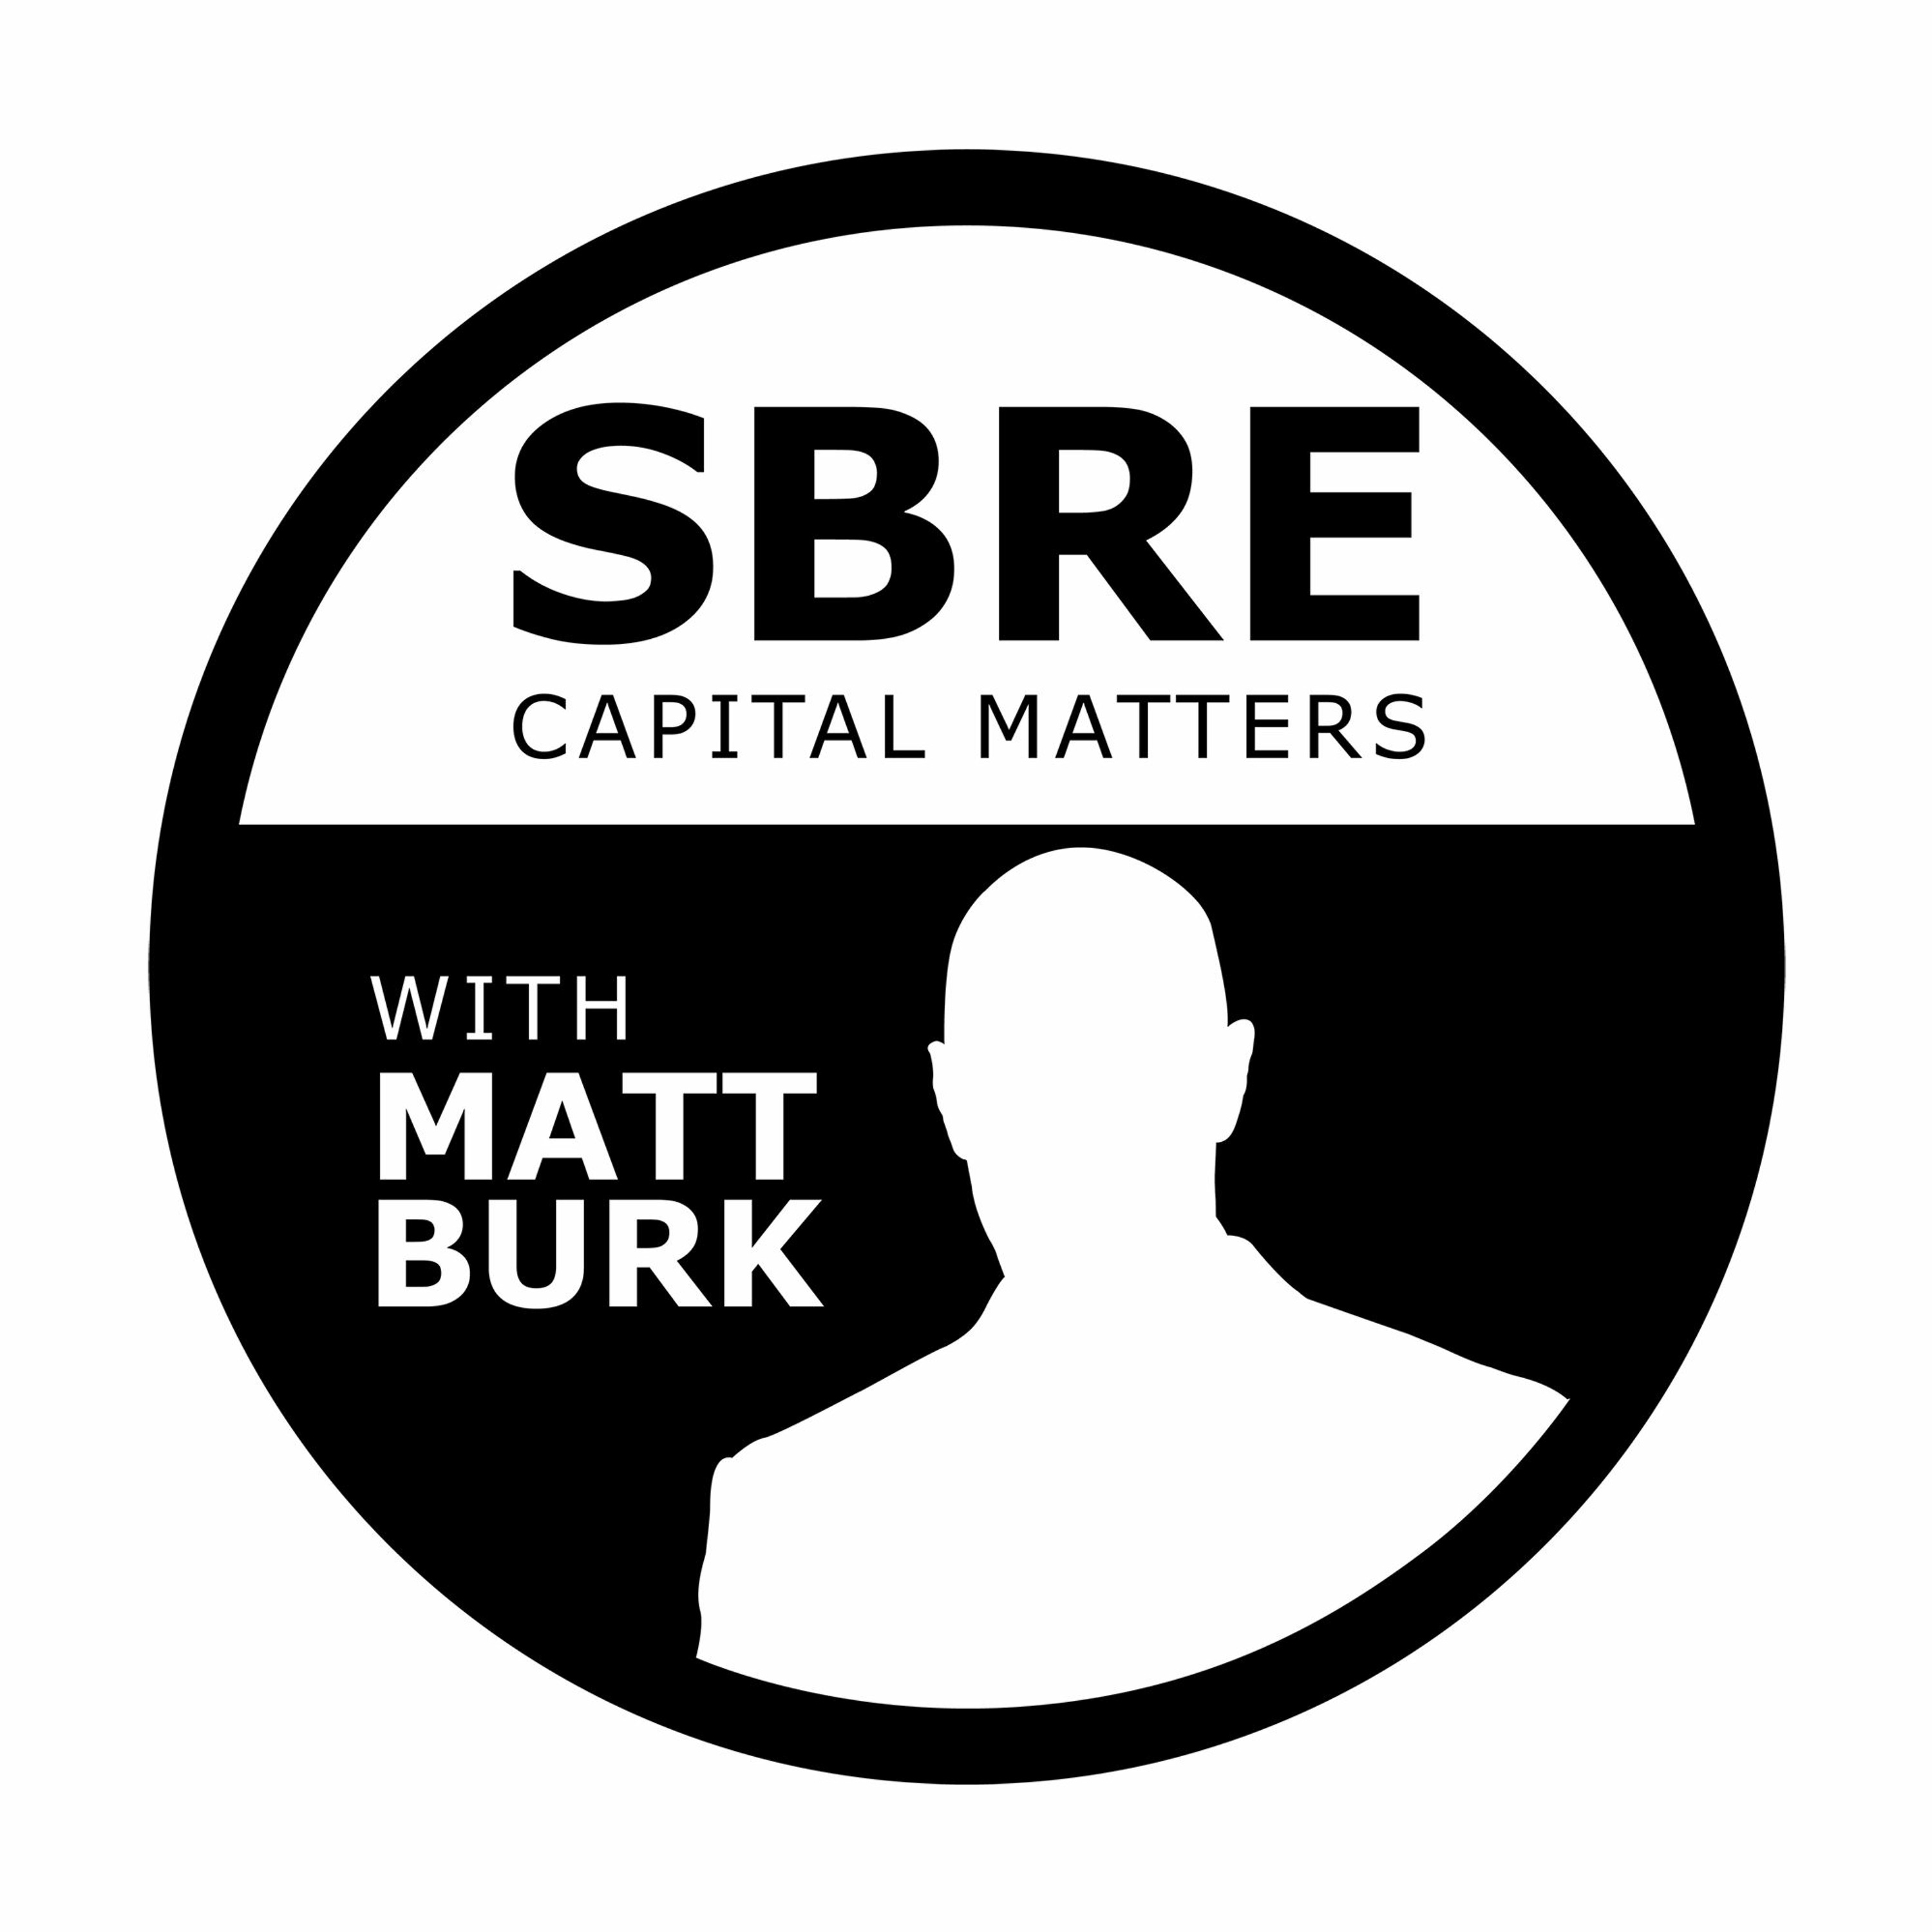 SBRE Capital Matters With Matt Burk SHOW #10 12/20/17